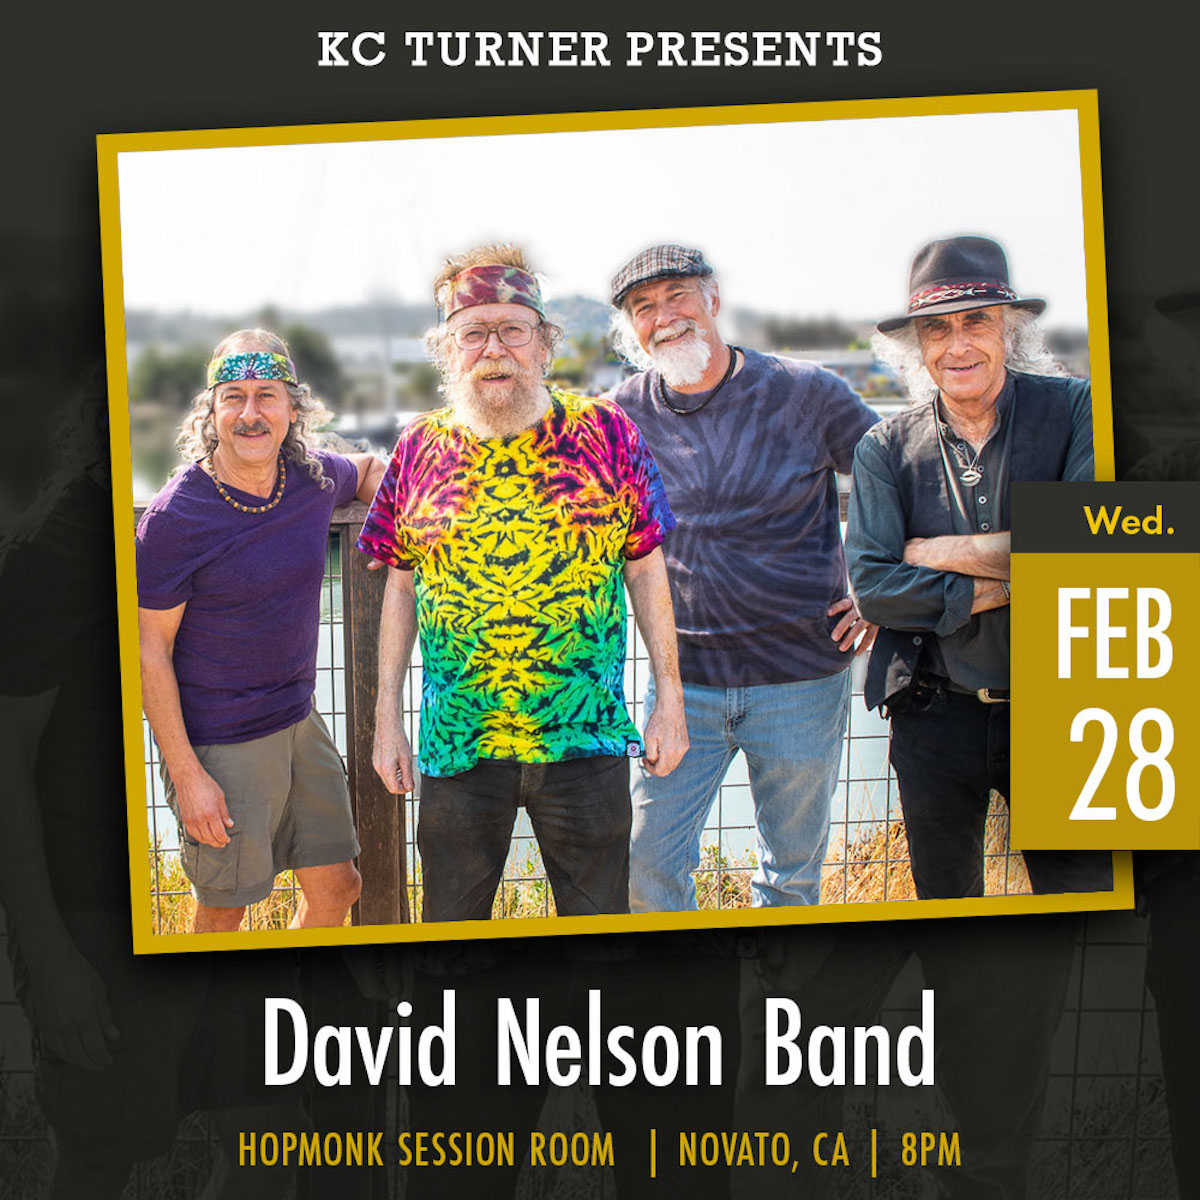 David Nelson Band playing at Hopmonk Novato in February. 